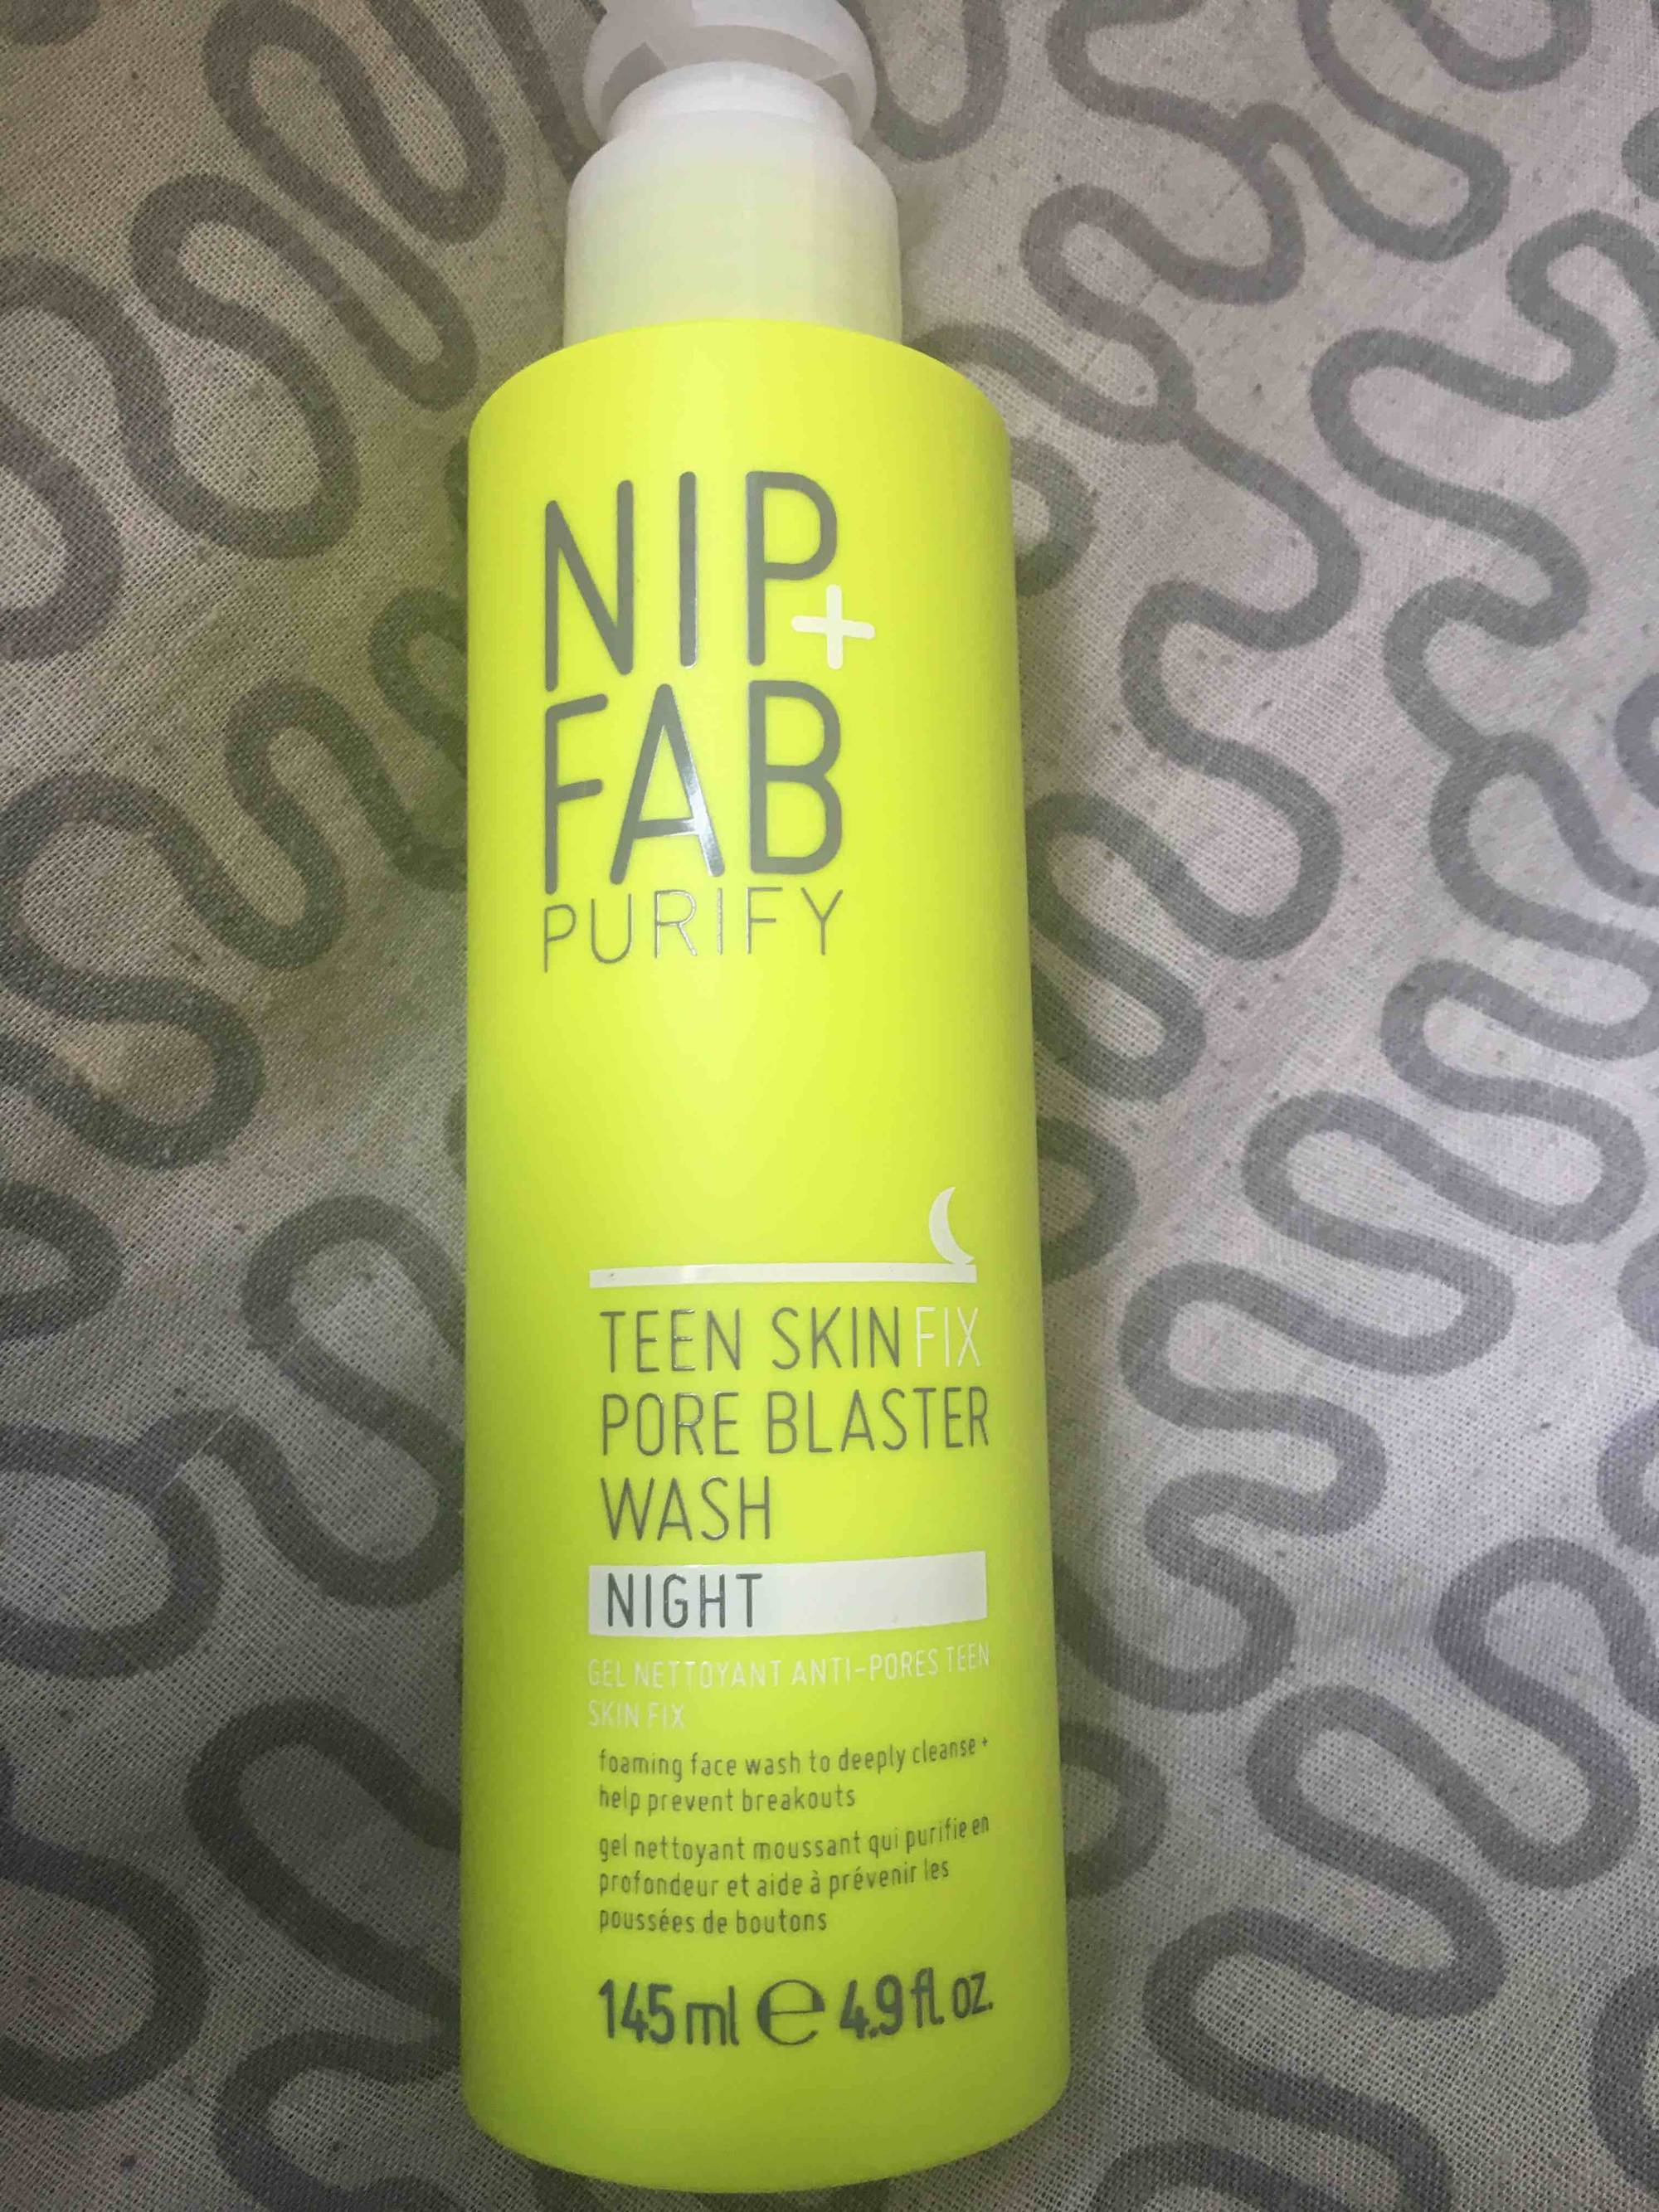 NIP + FAB - Purify - Gel nettoyant anti-pores teen skin fix